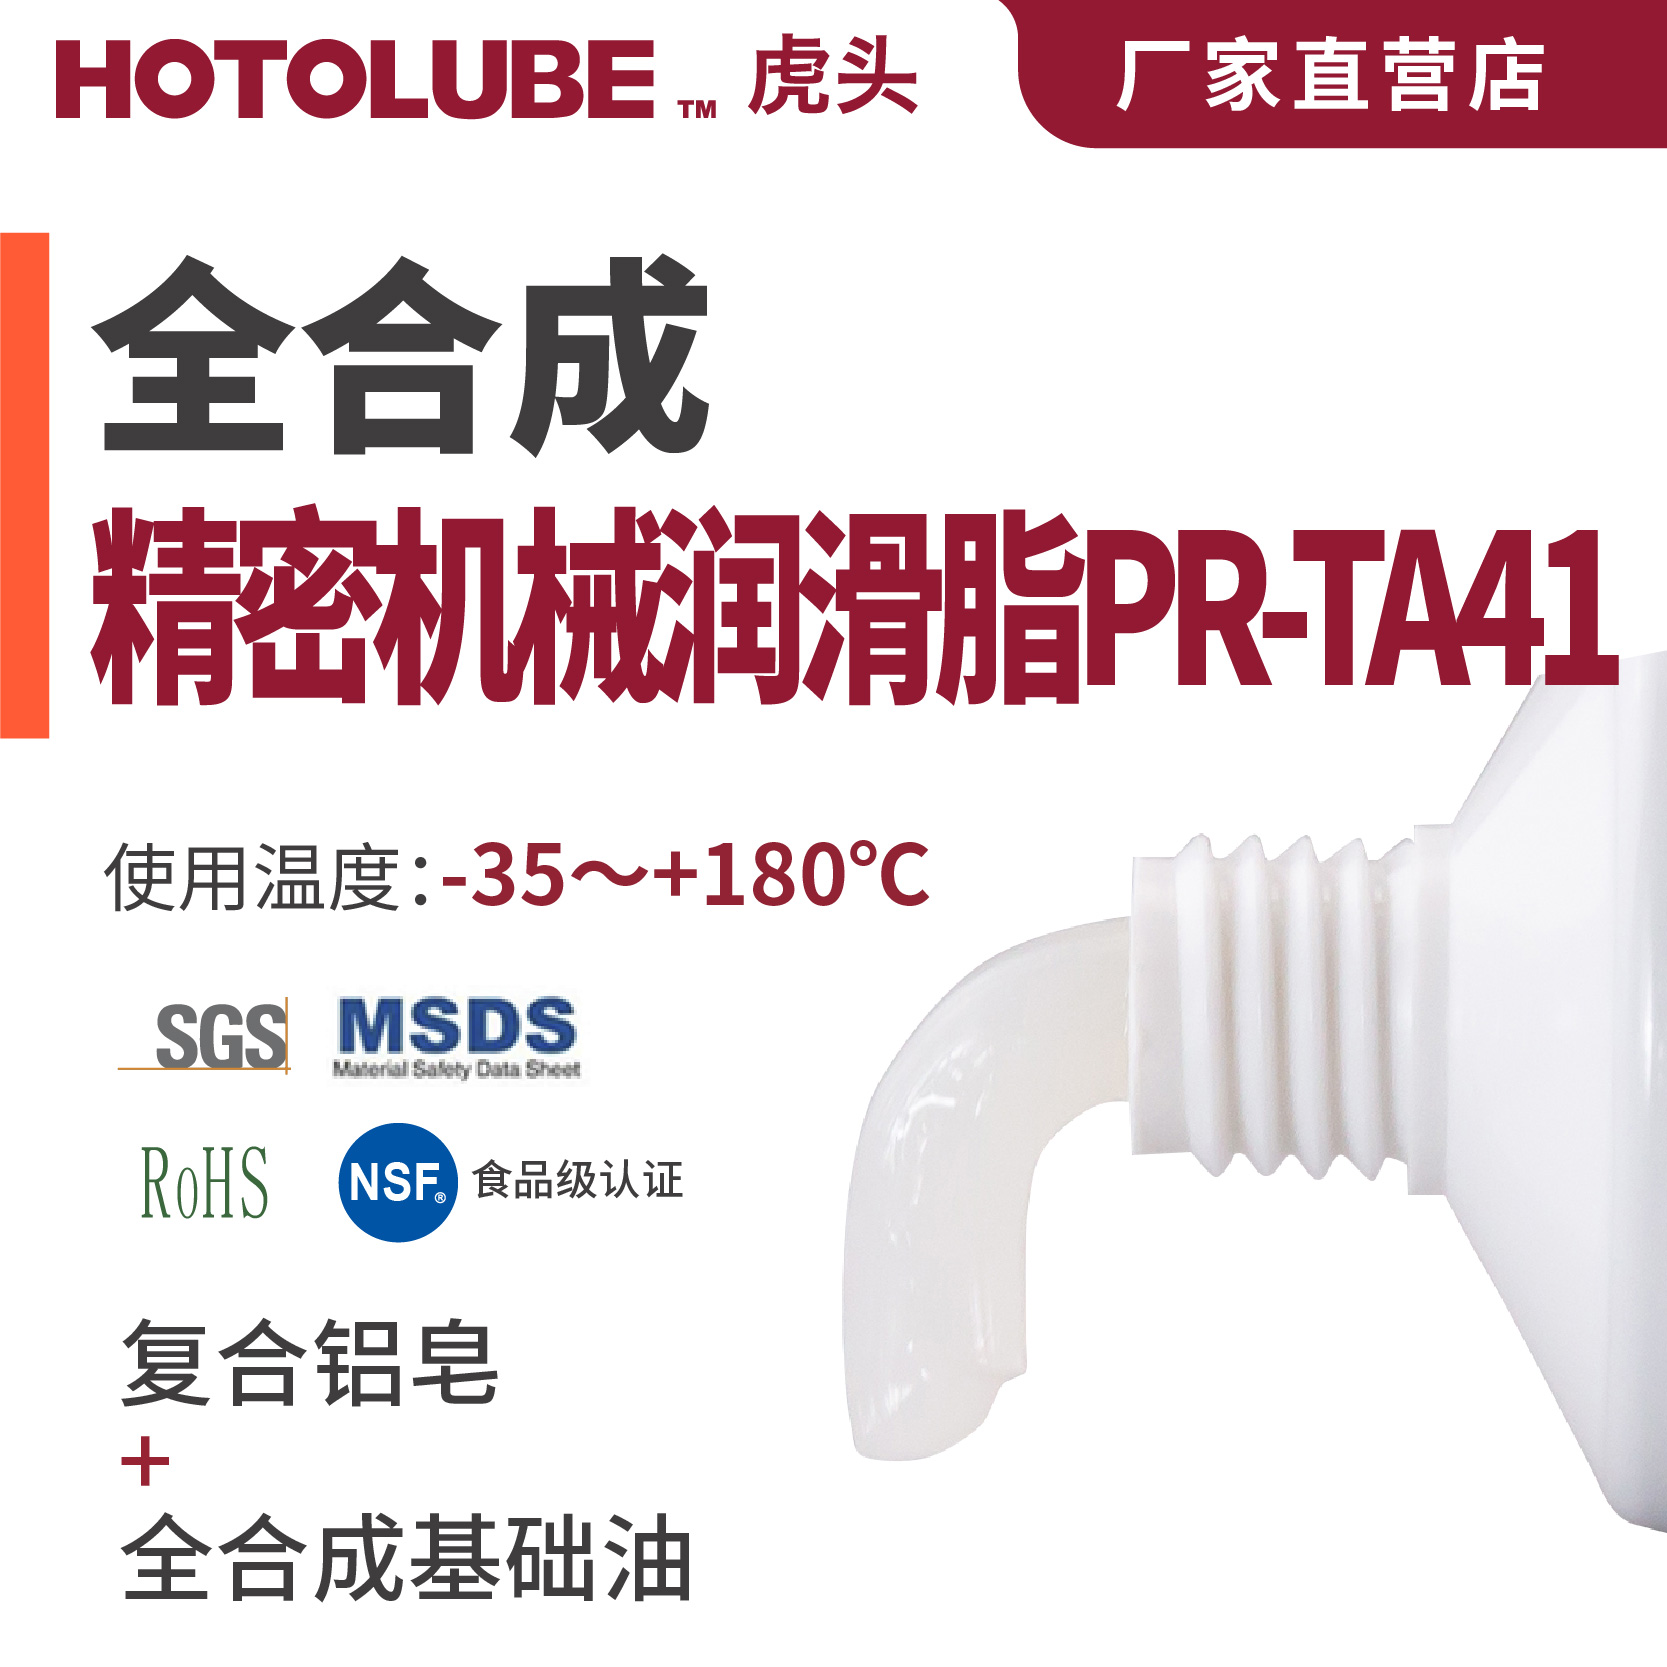 Hotolube虎头全合成精密机械润滑脂PR-TA41 NSF食品级PAO基础油脂-封面